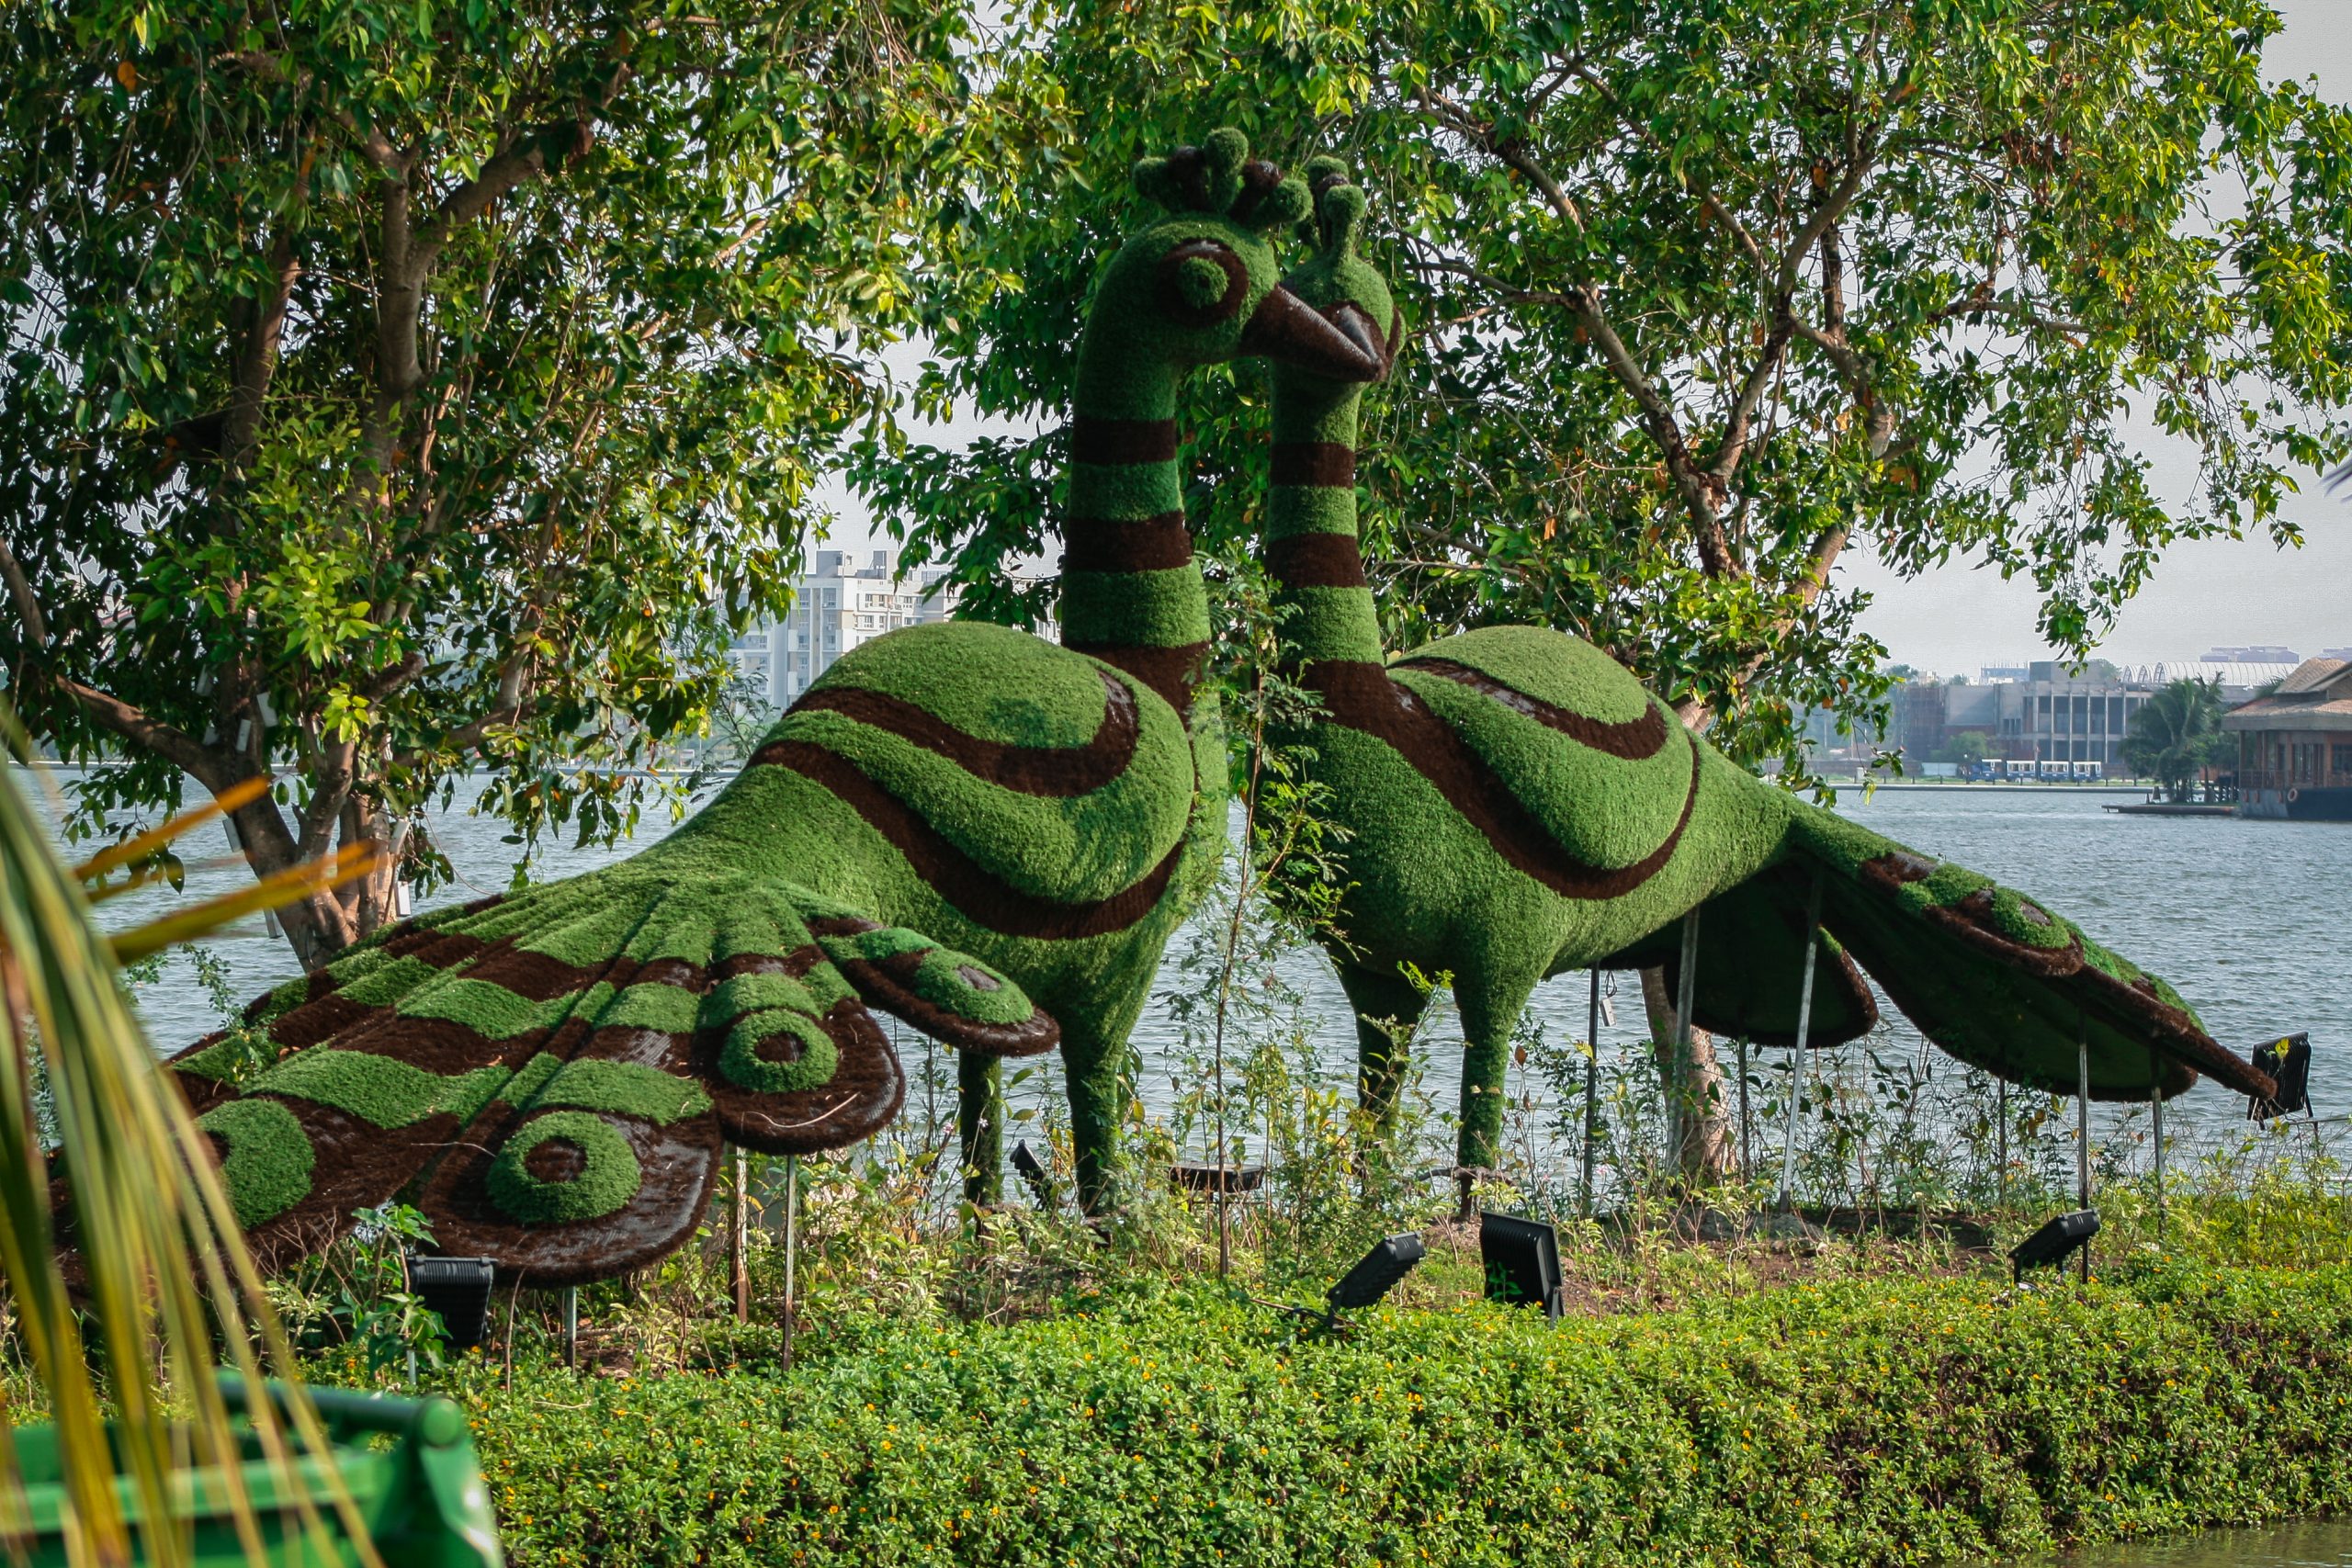 Sculptures of peacock